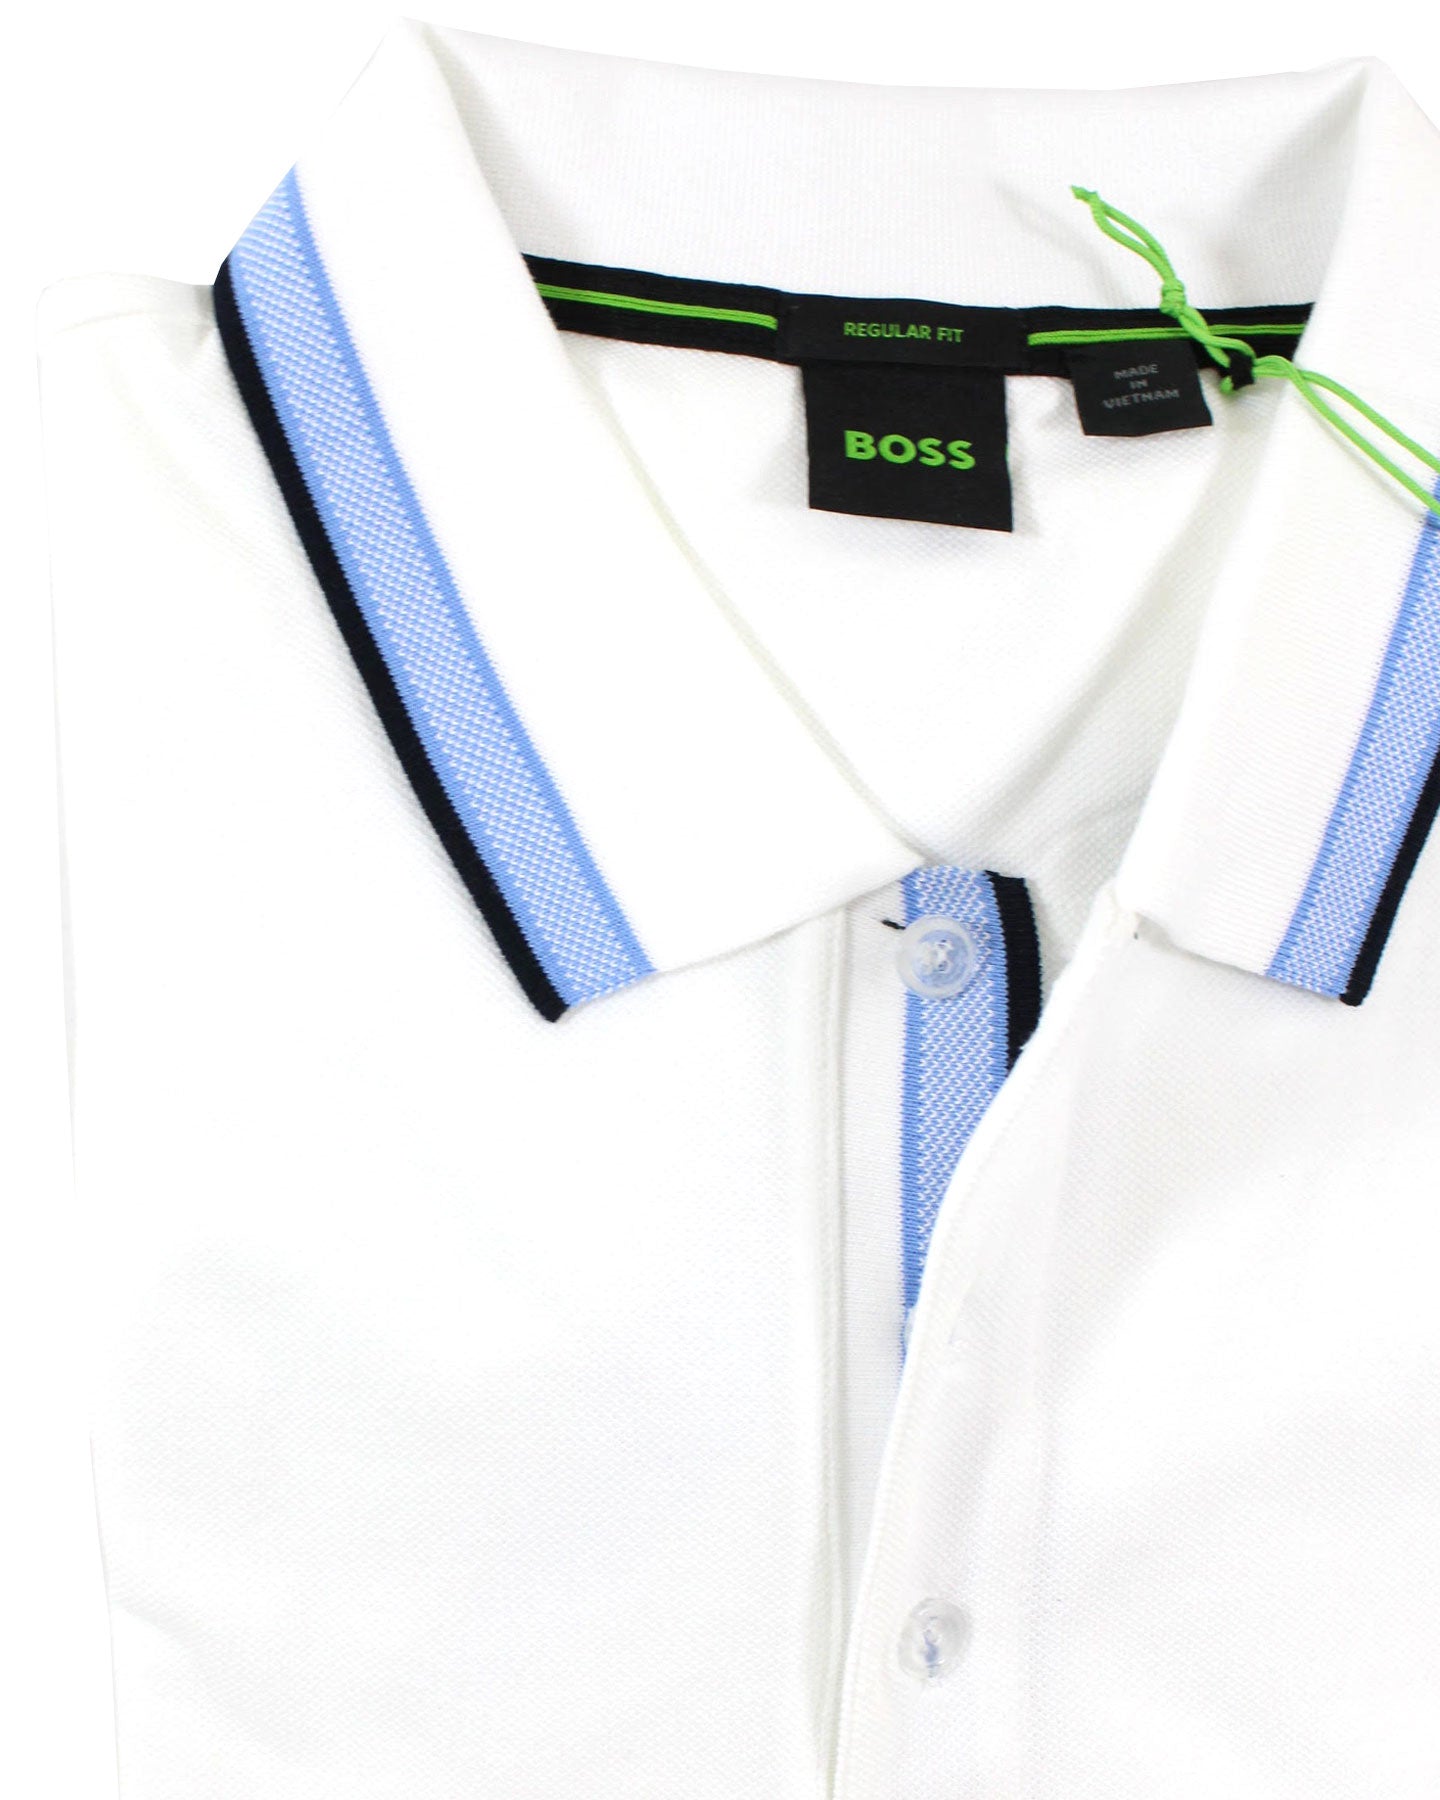 Hugo Boss Polo Shirt Regular Fit White Stretch Cotton